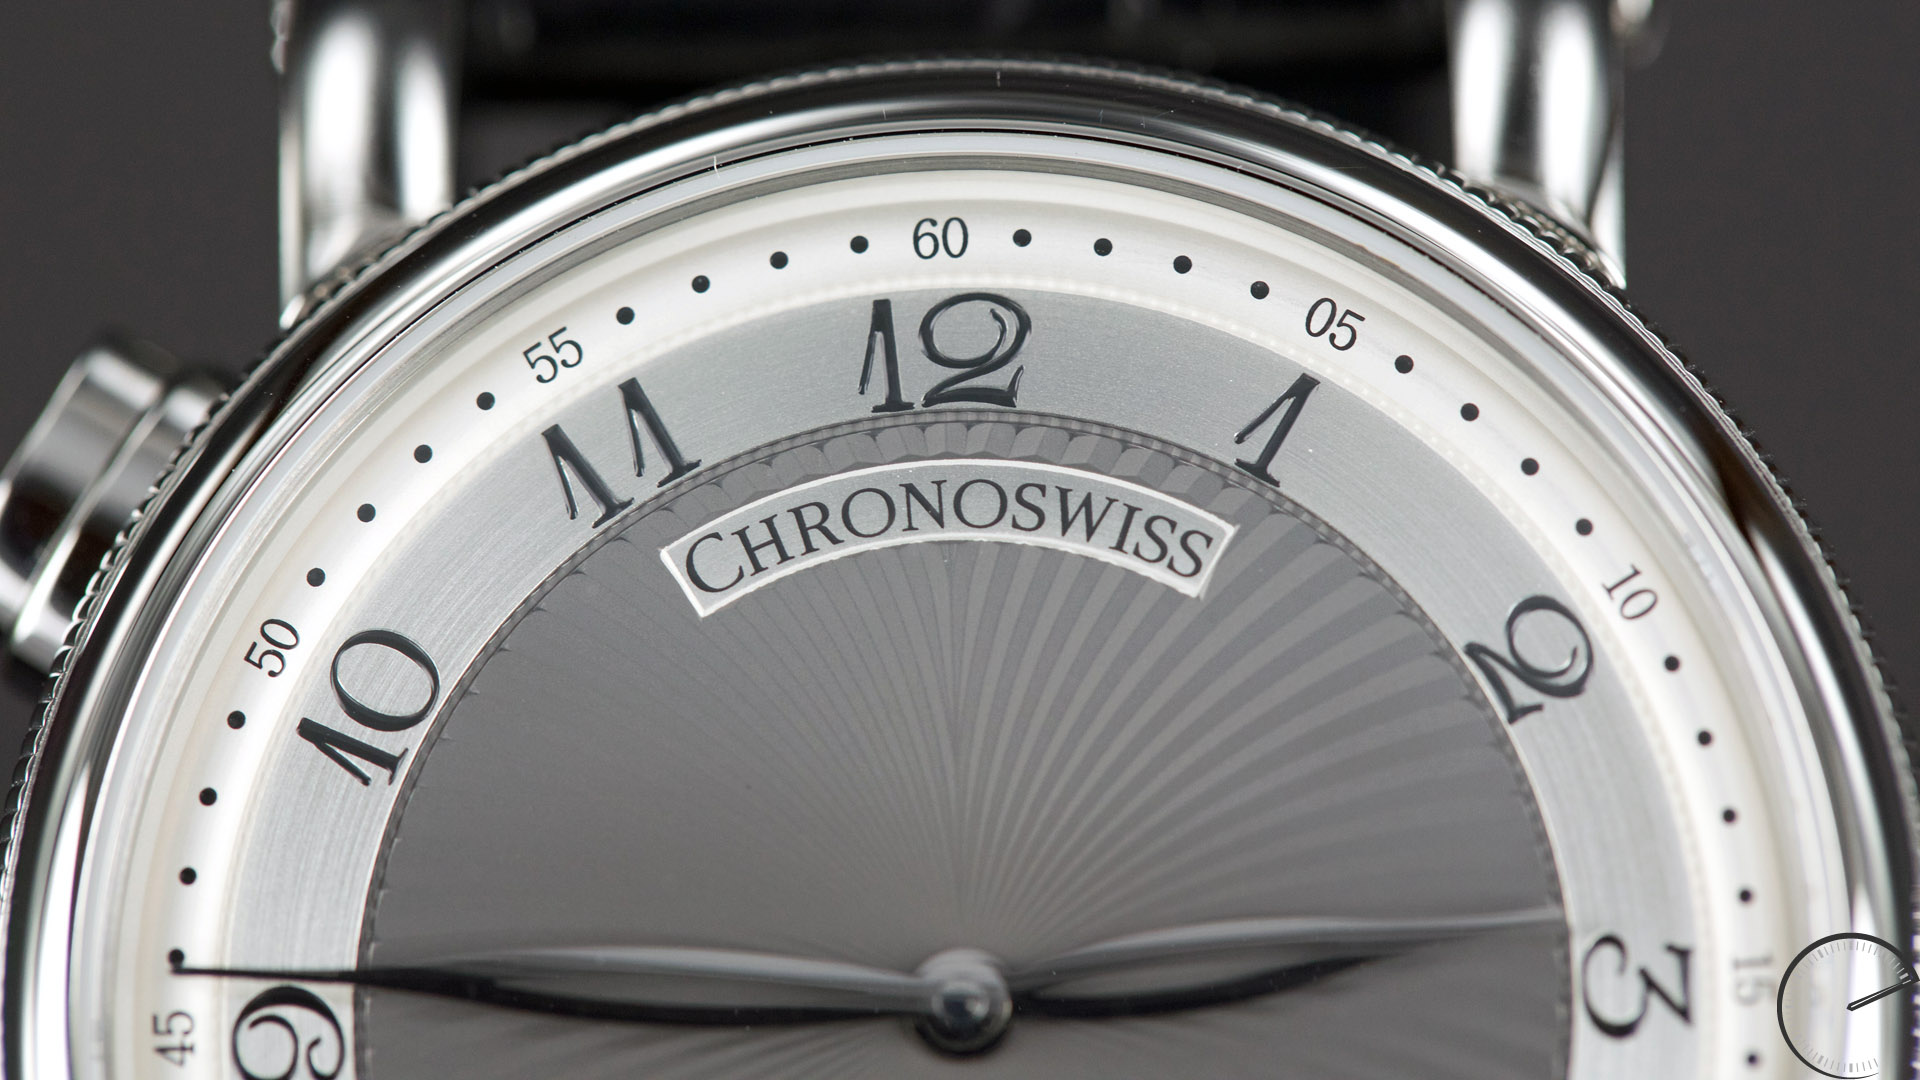 Chronoswiss Regulateur Jumping Hour CH-8323 - ESCAPEMENT - watch replica blog by Angus Davies